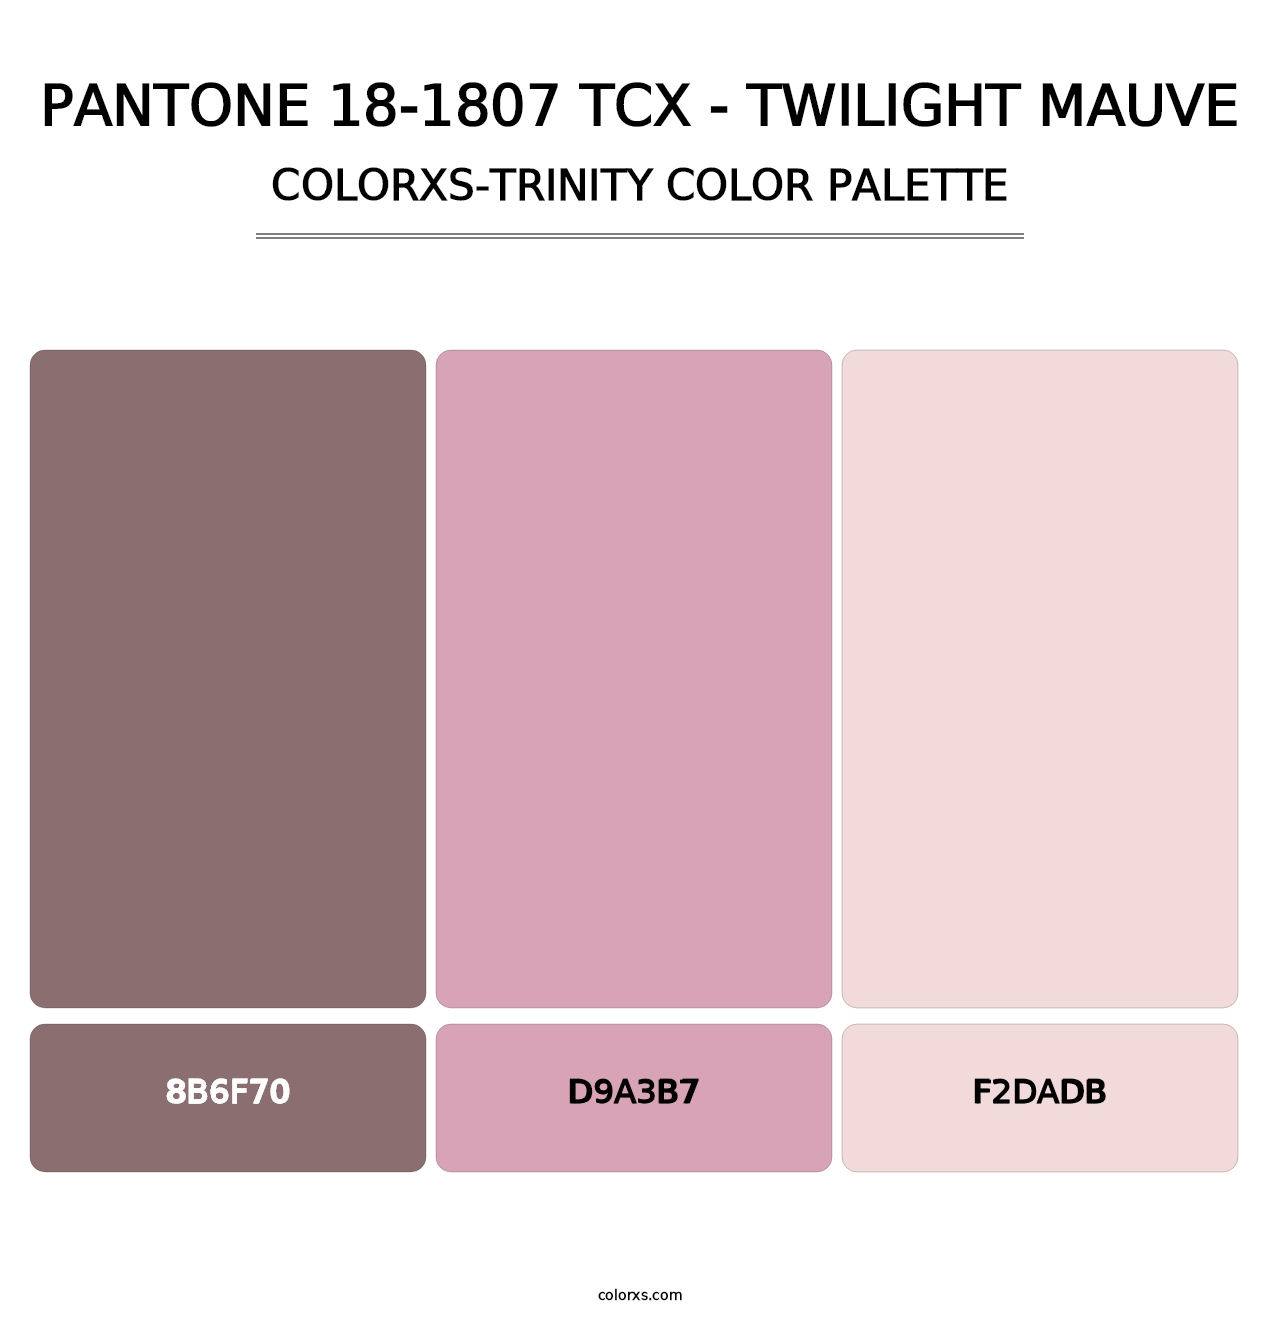 PANTONE 18-1807 TCX - Twilight Mauve - Colorxs Trinity Palette